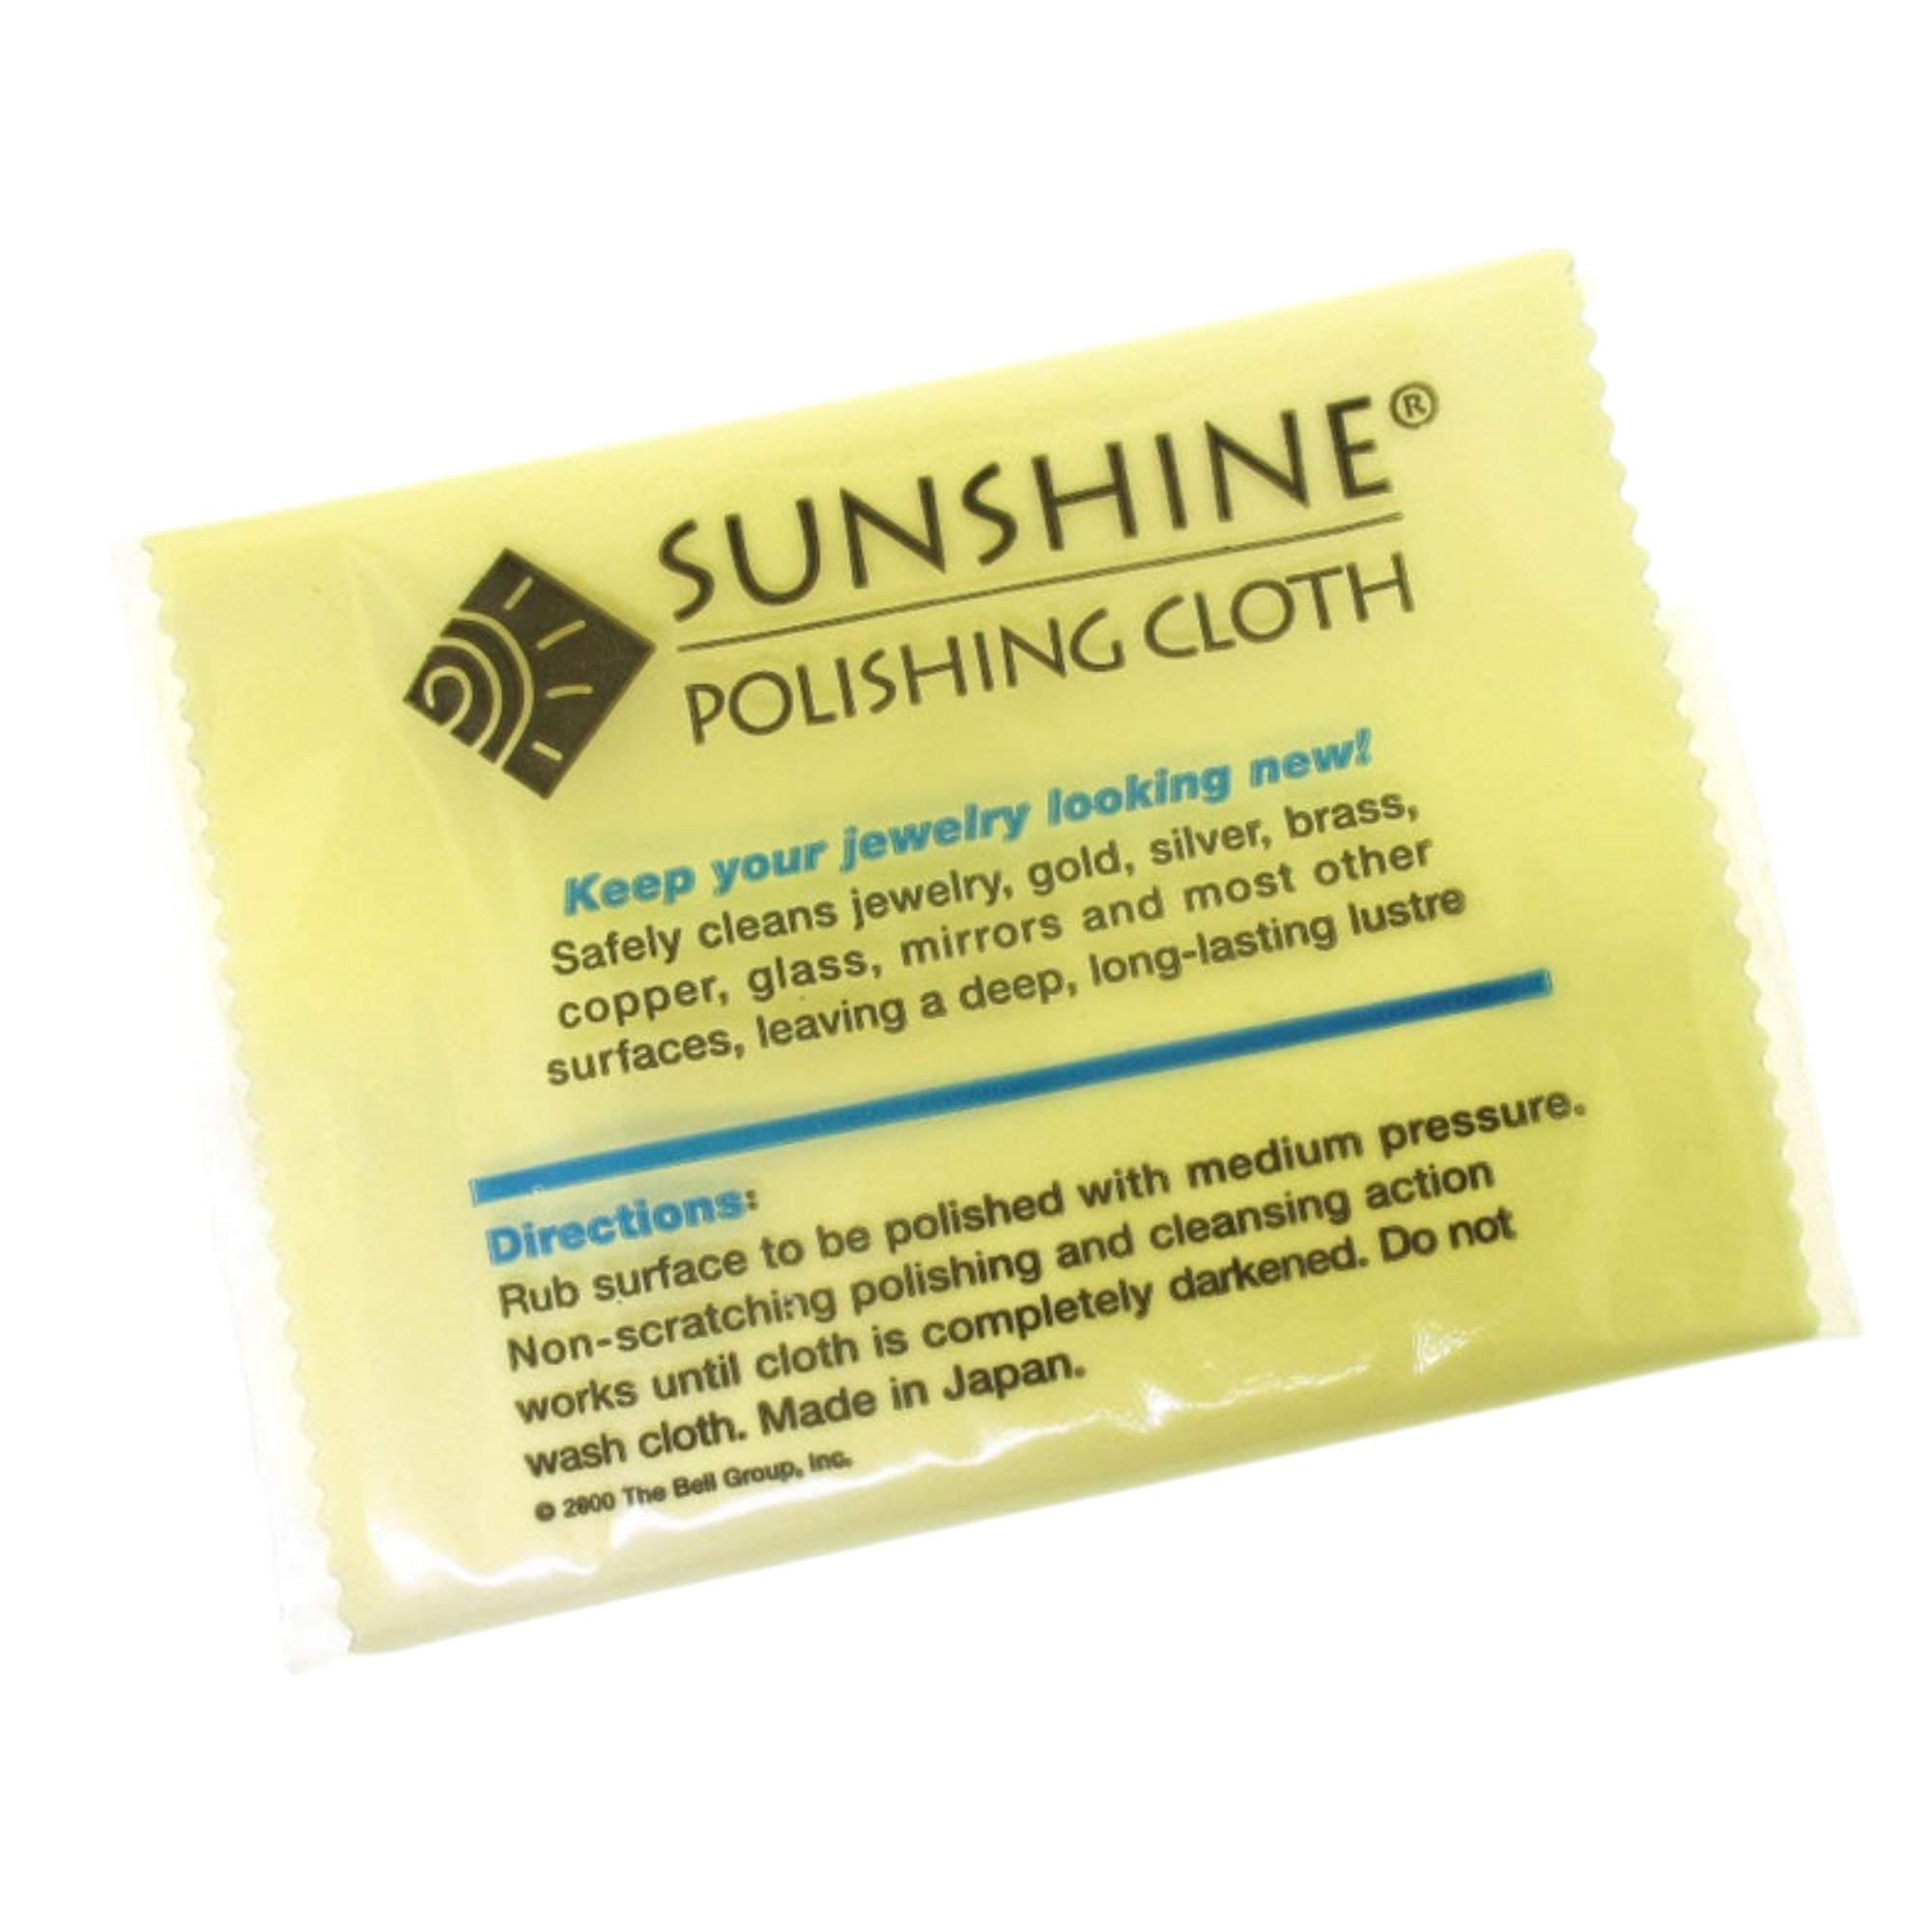 Polishing Cloth - Sunshine Polishing Cloth - TheBlissfulCo